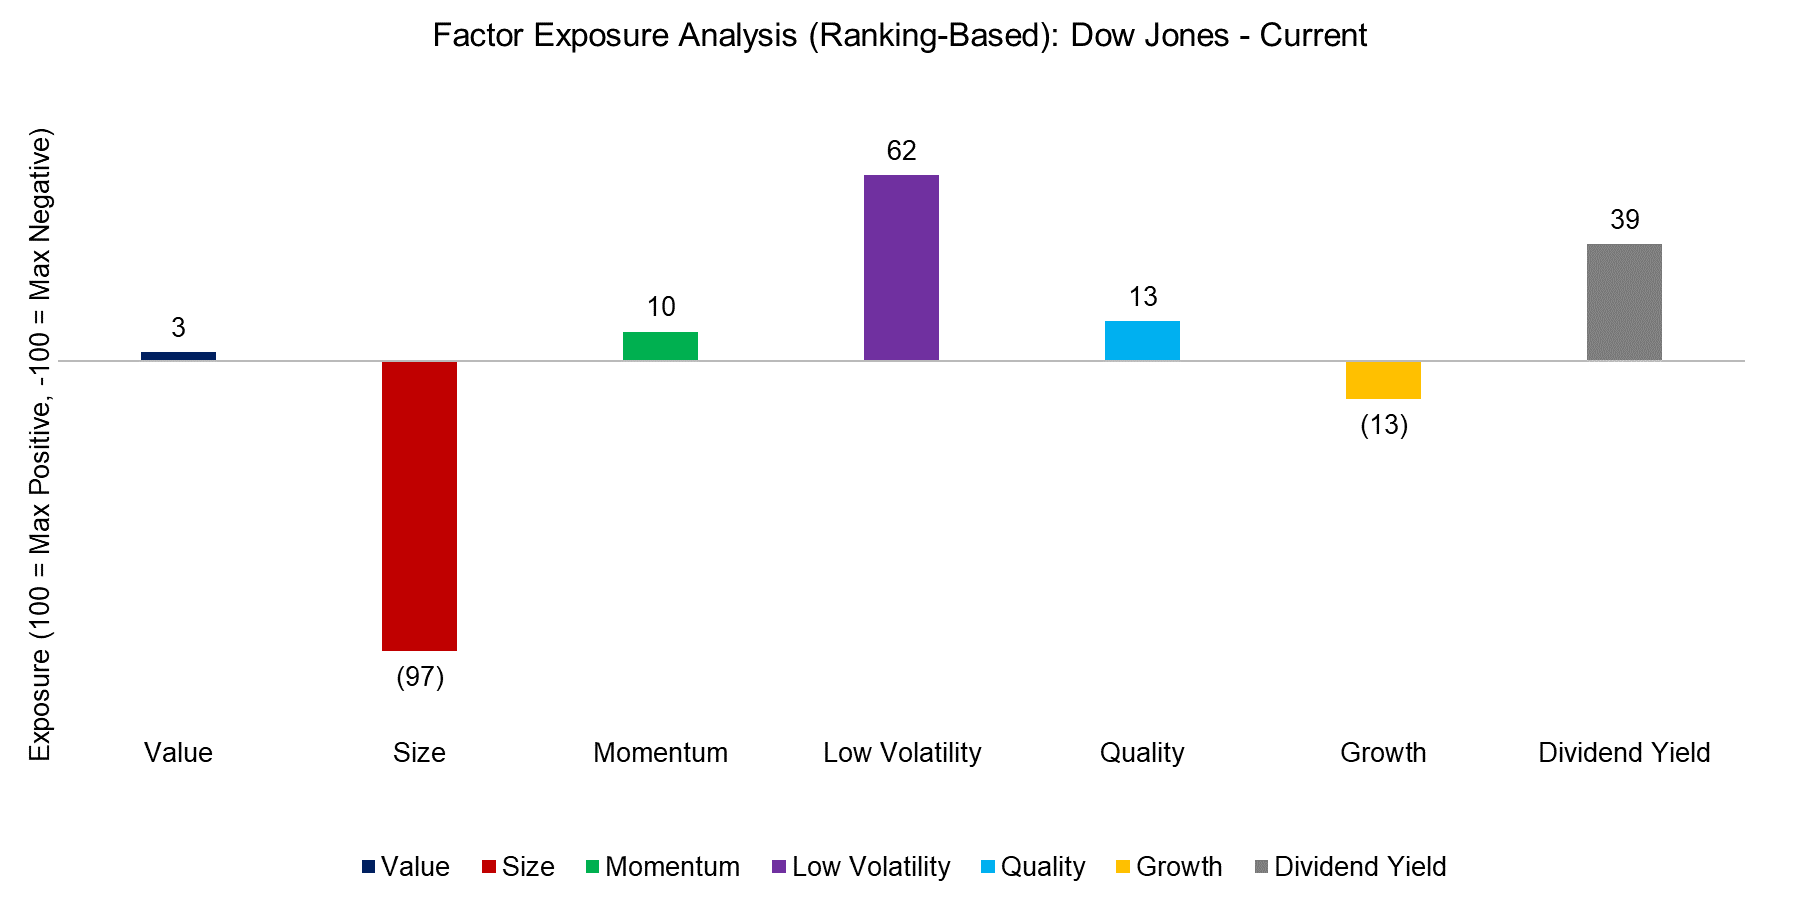 Factor Exposure Analysis (Ranking-Based) - Current Dow Jones